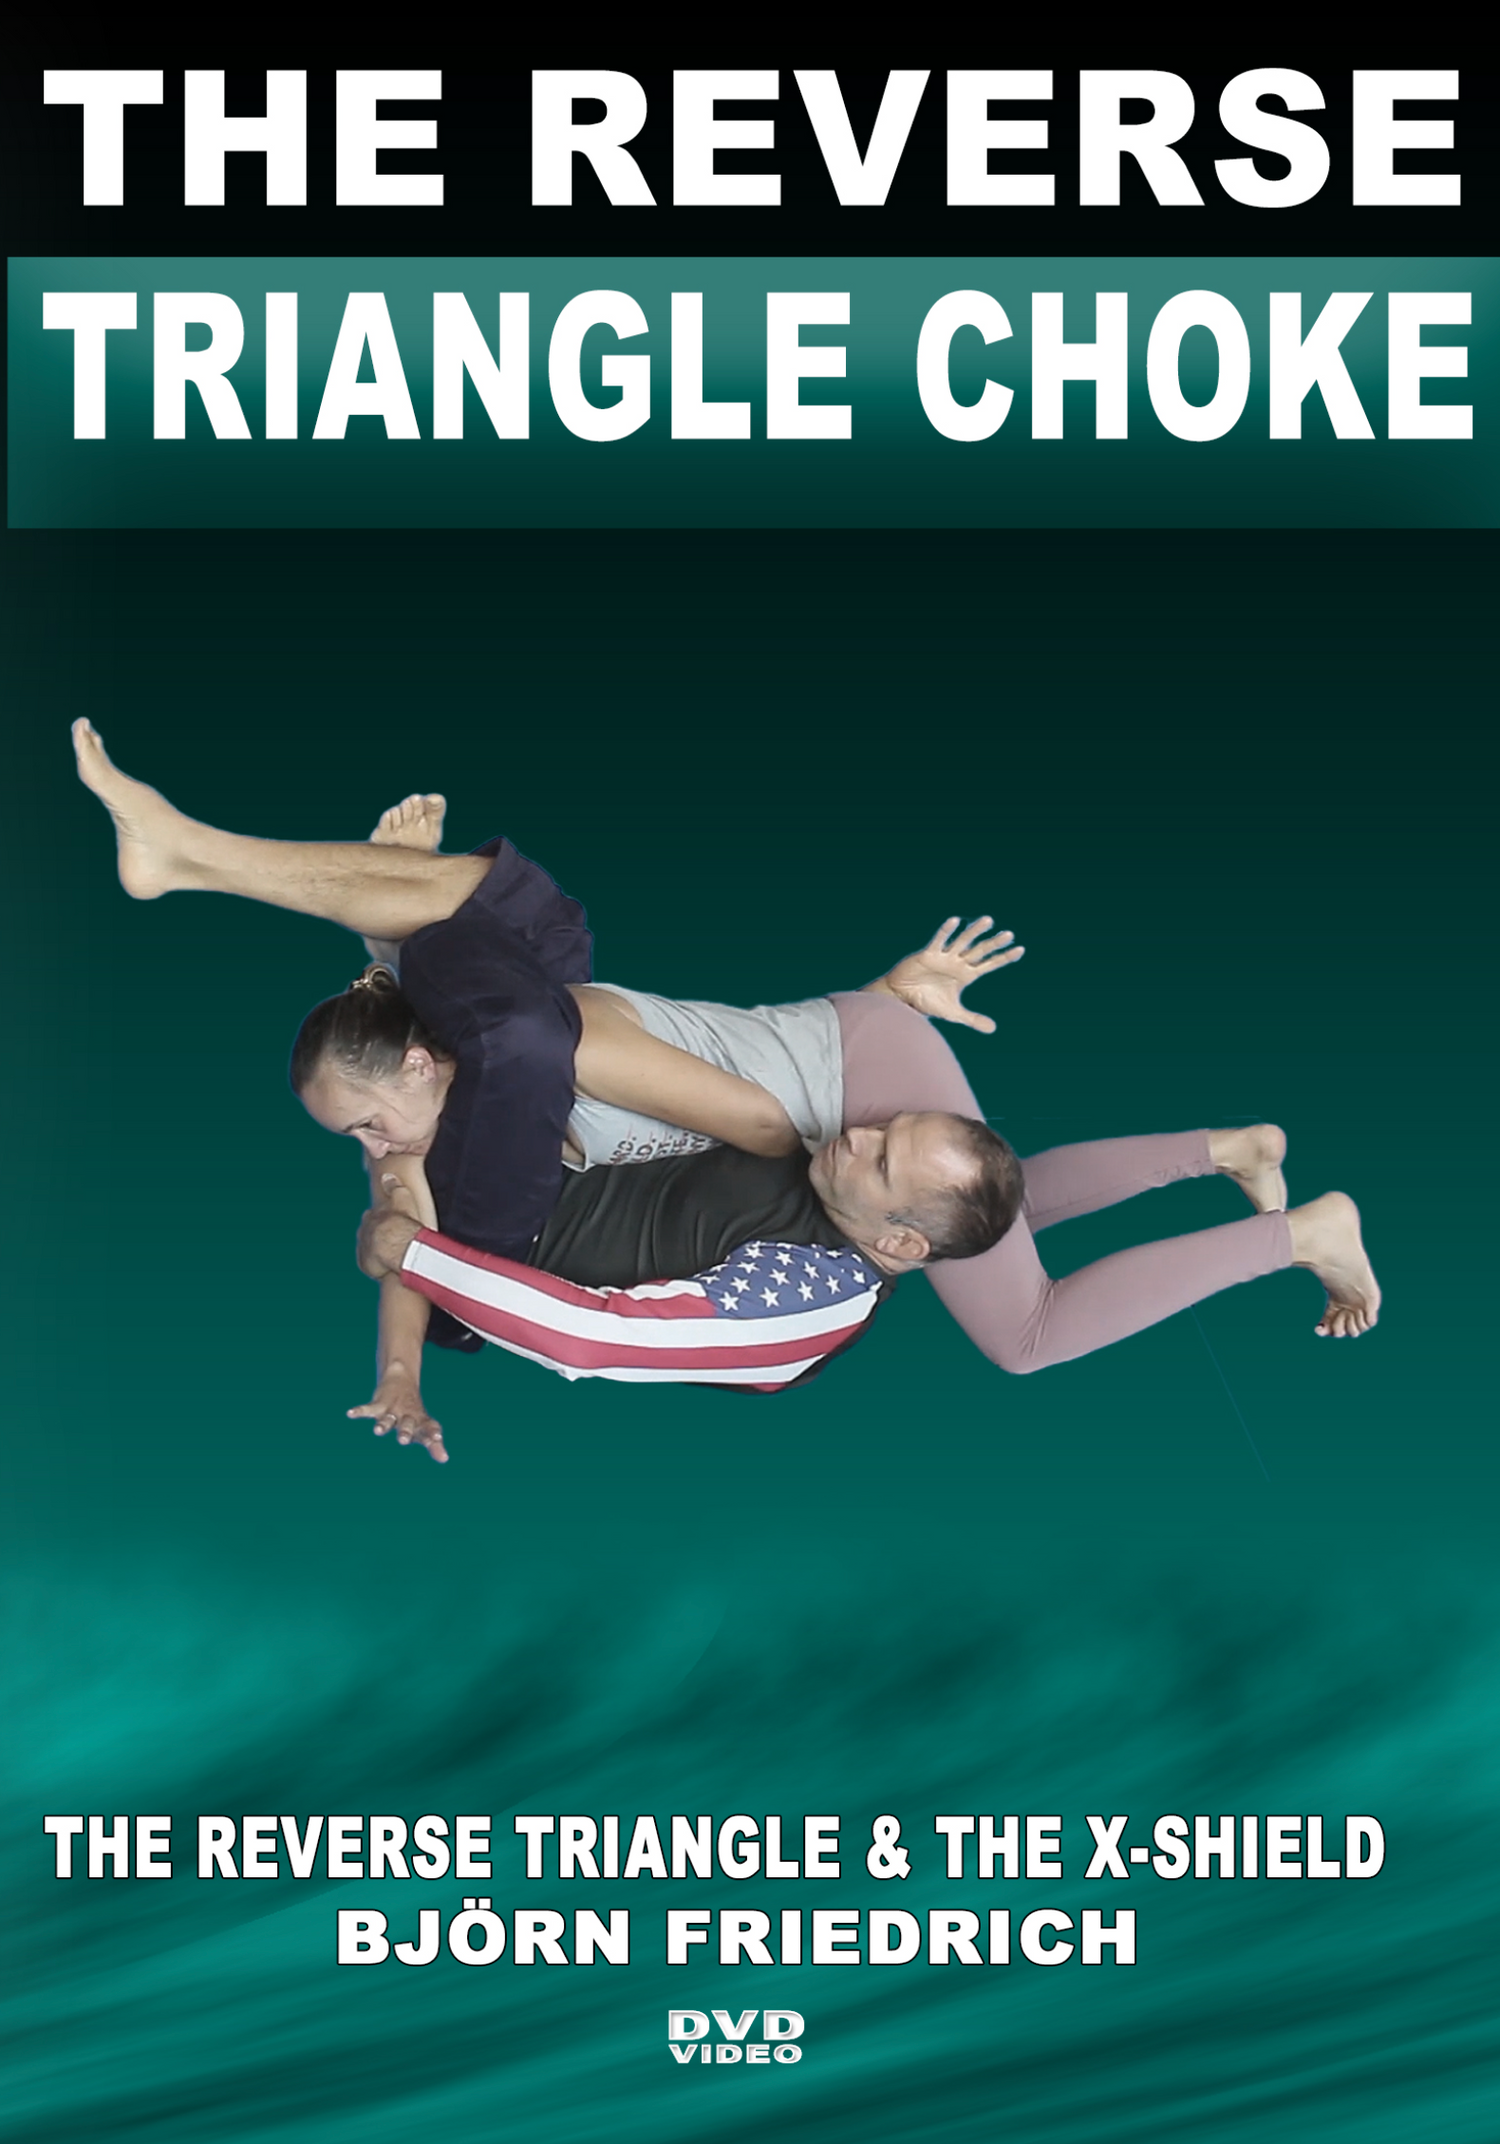 The Reverse Triangle Choke 2 DVD Set with Bjorn Friedrich